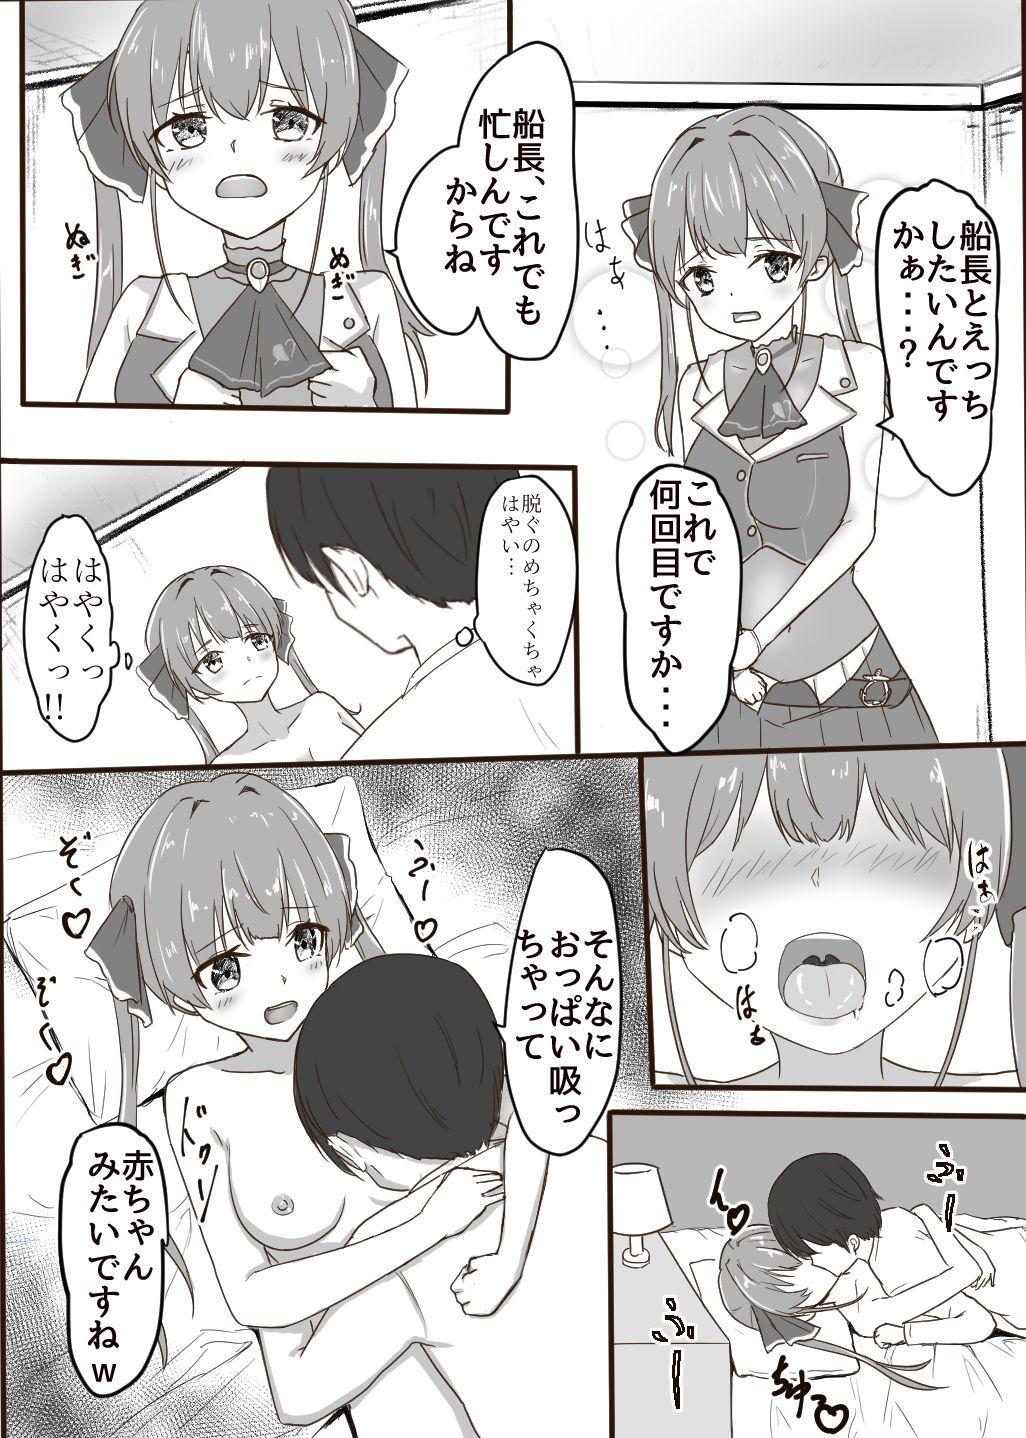 Houshou Marine R18 Manga 0